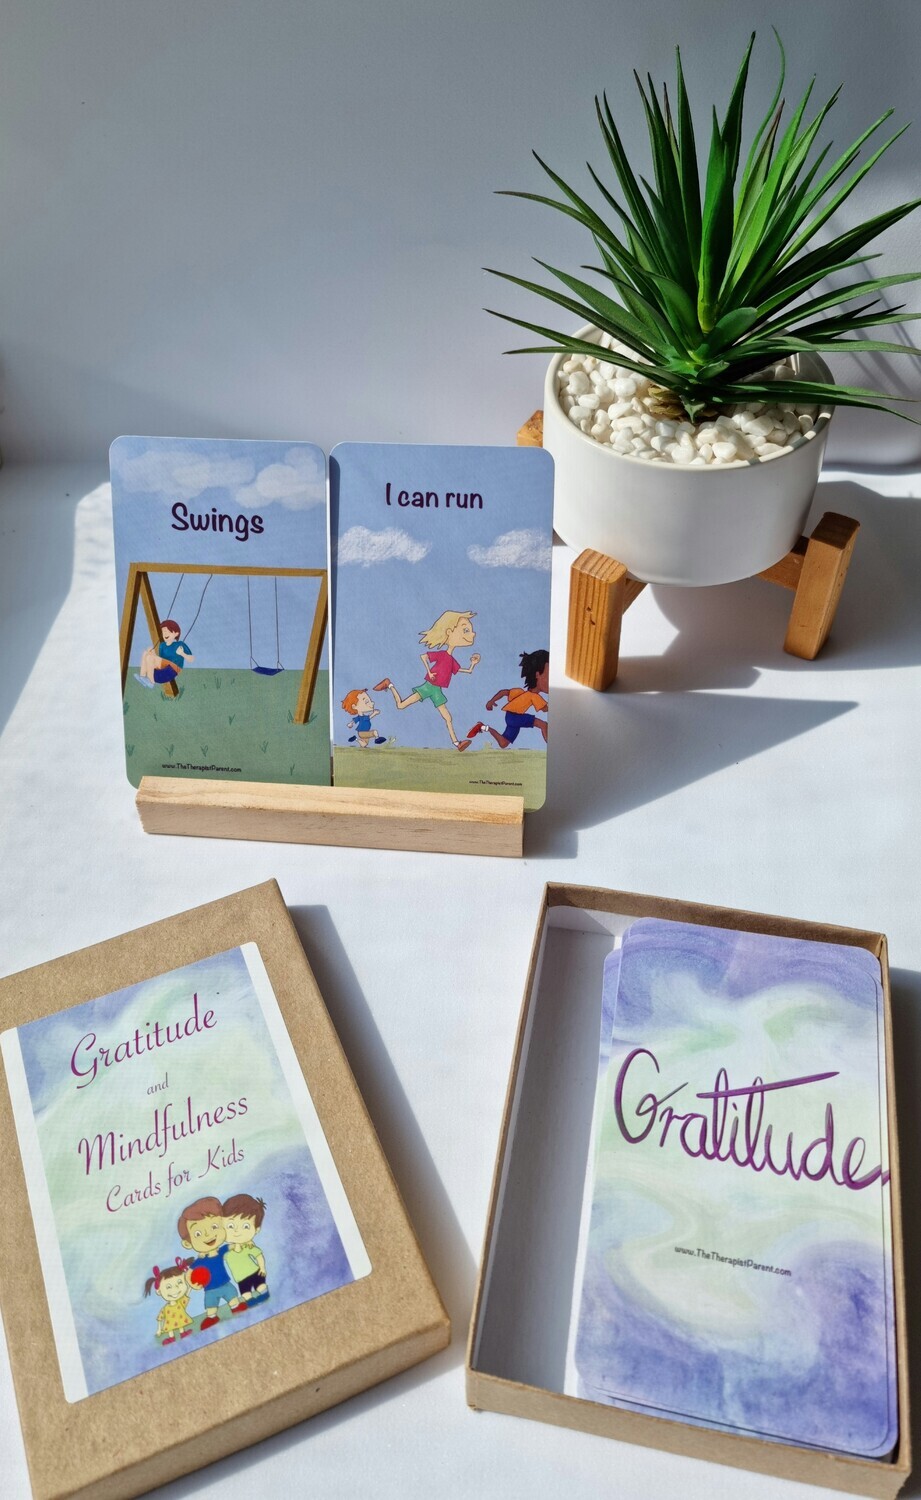 Gratitude and Mindfulness Cards